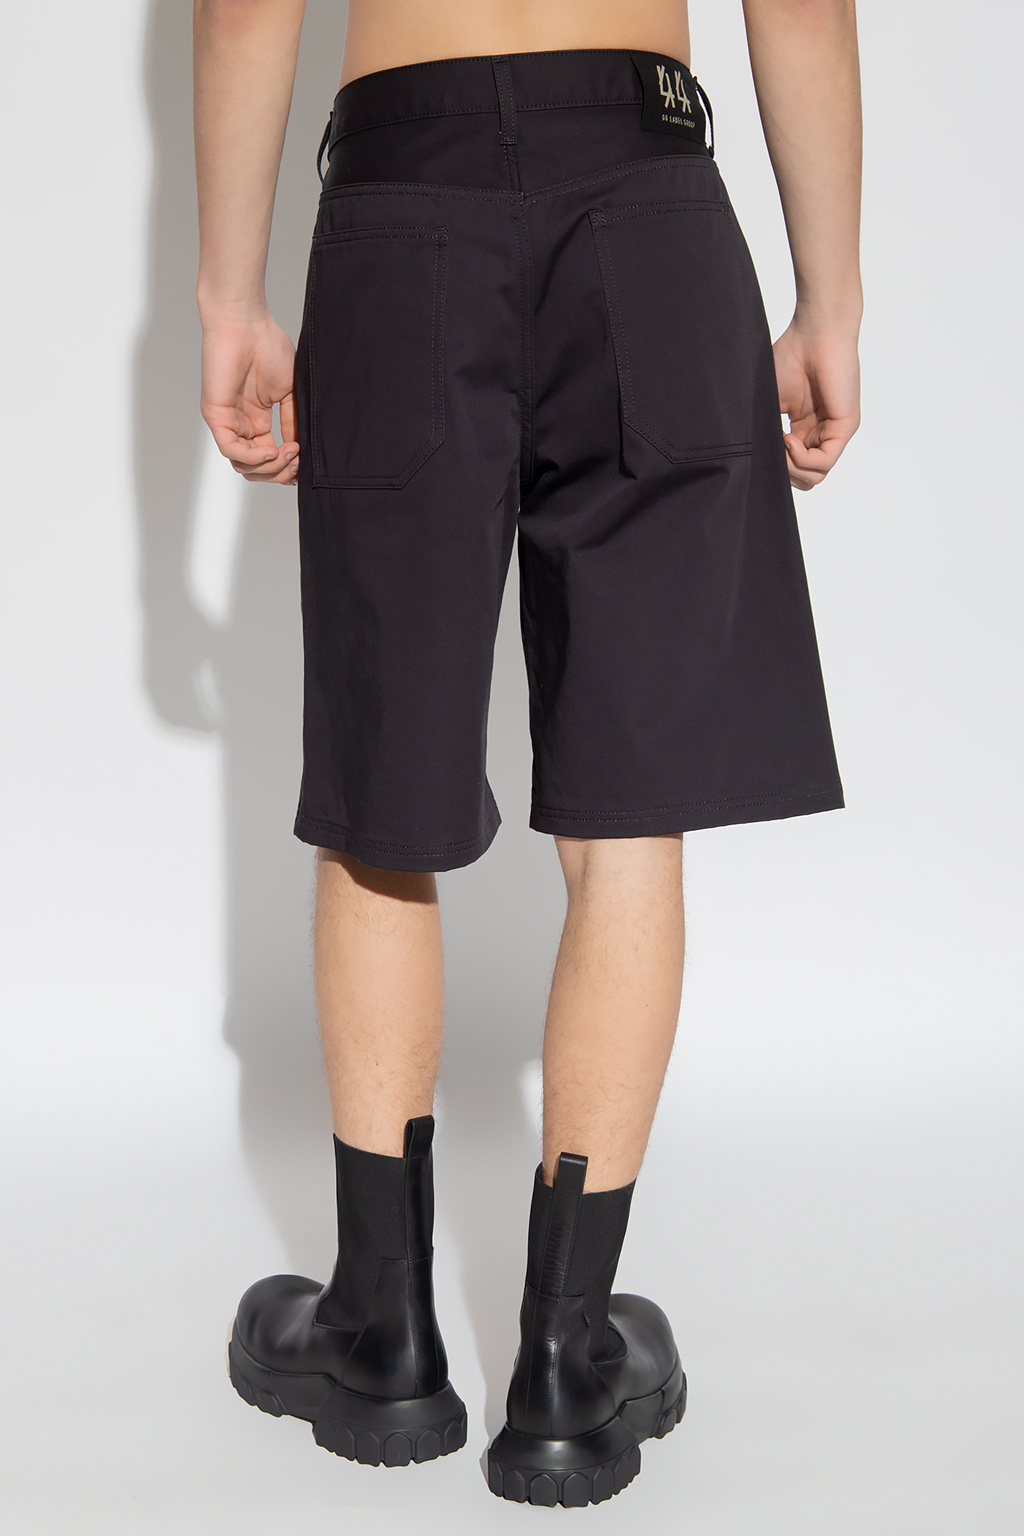 44 Label Group Manokhi high-waisted A-line shorts